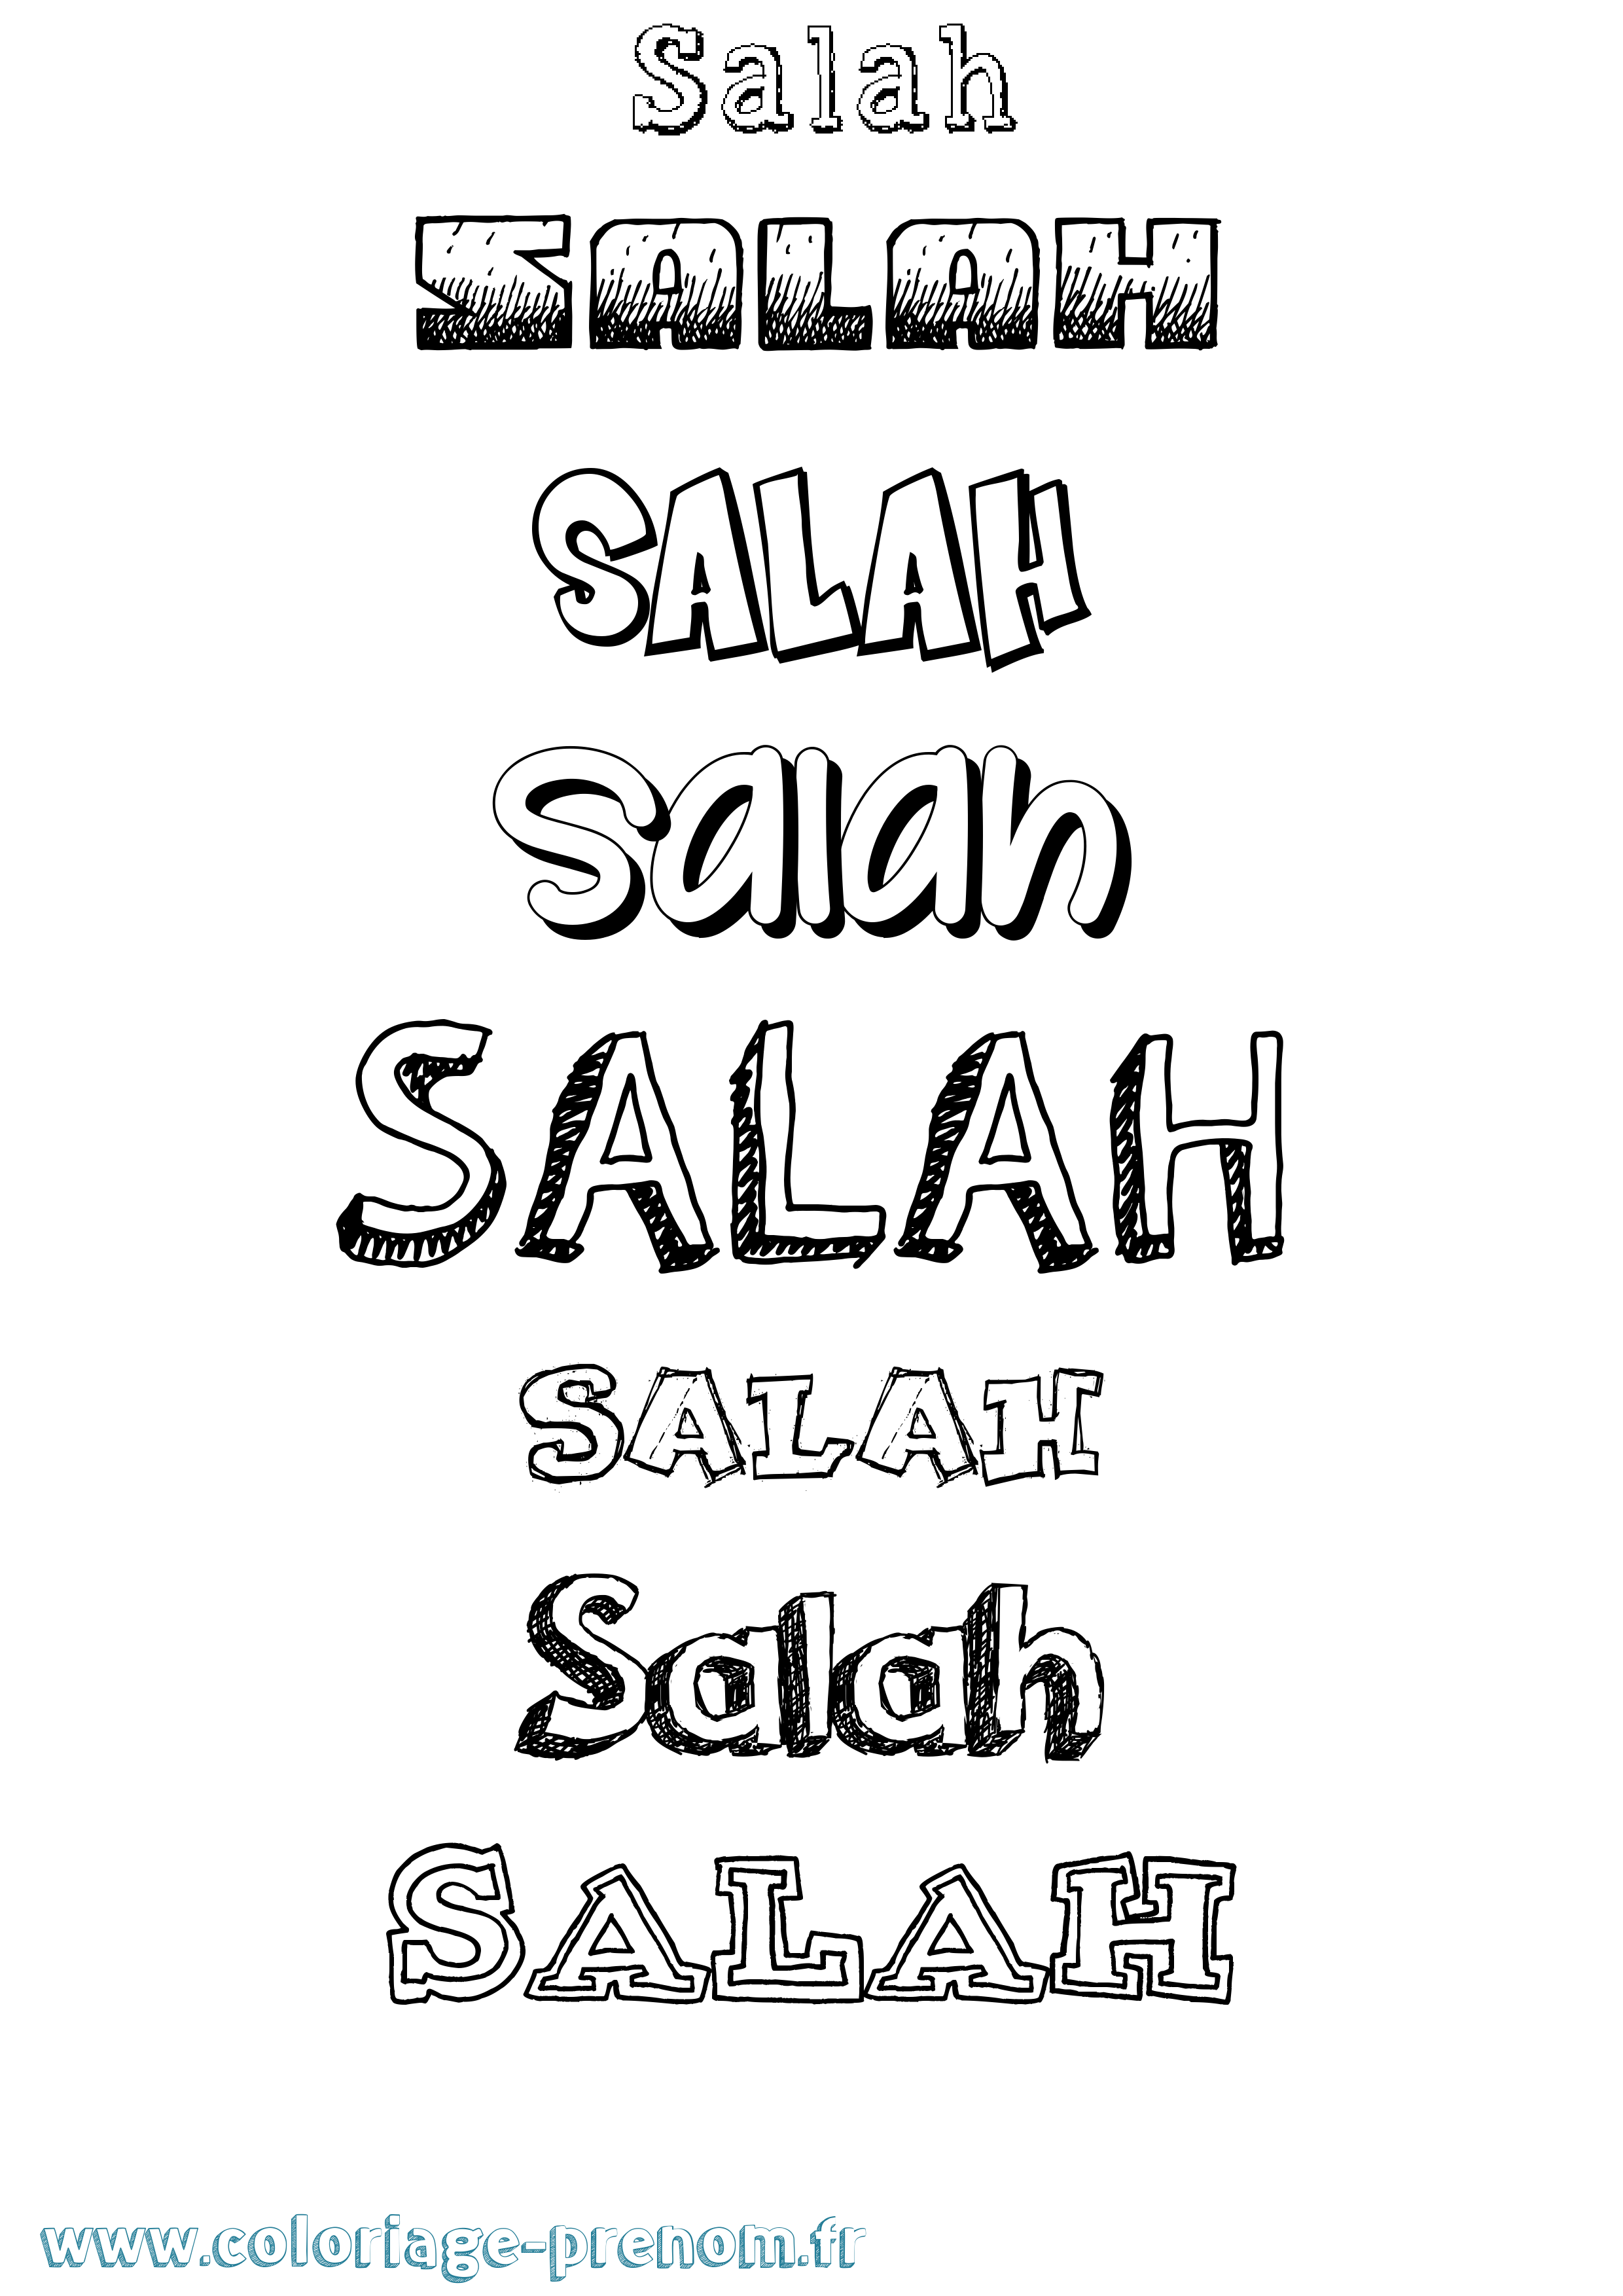 Coloriage prénom Salah Dessiné